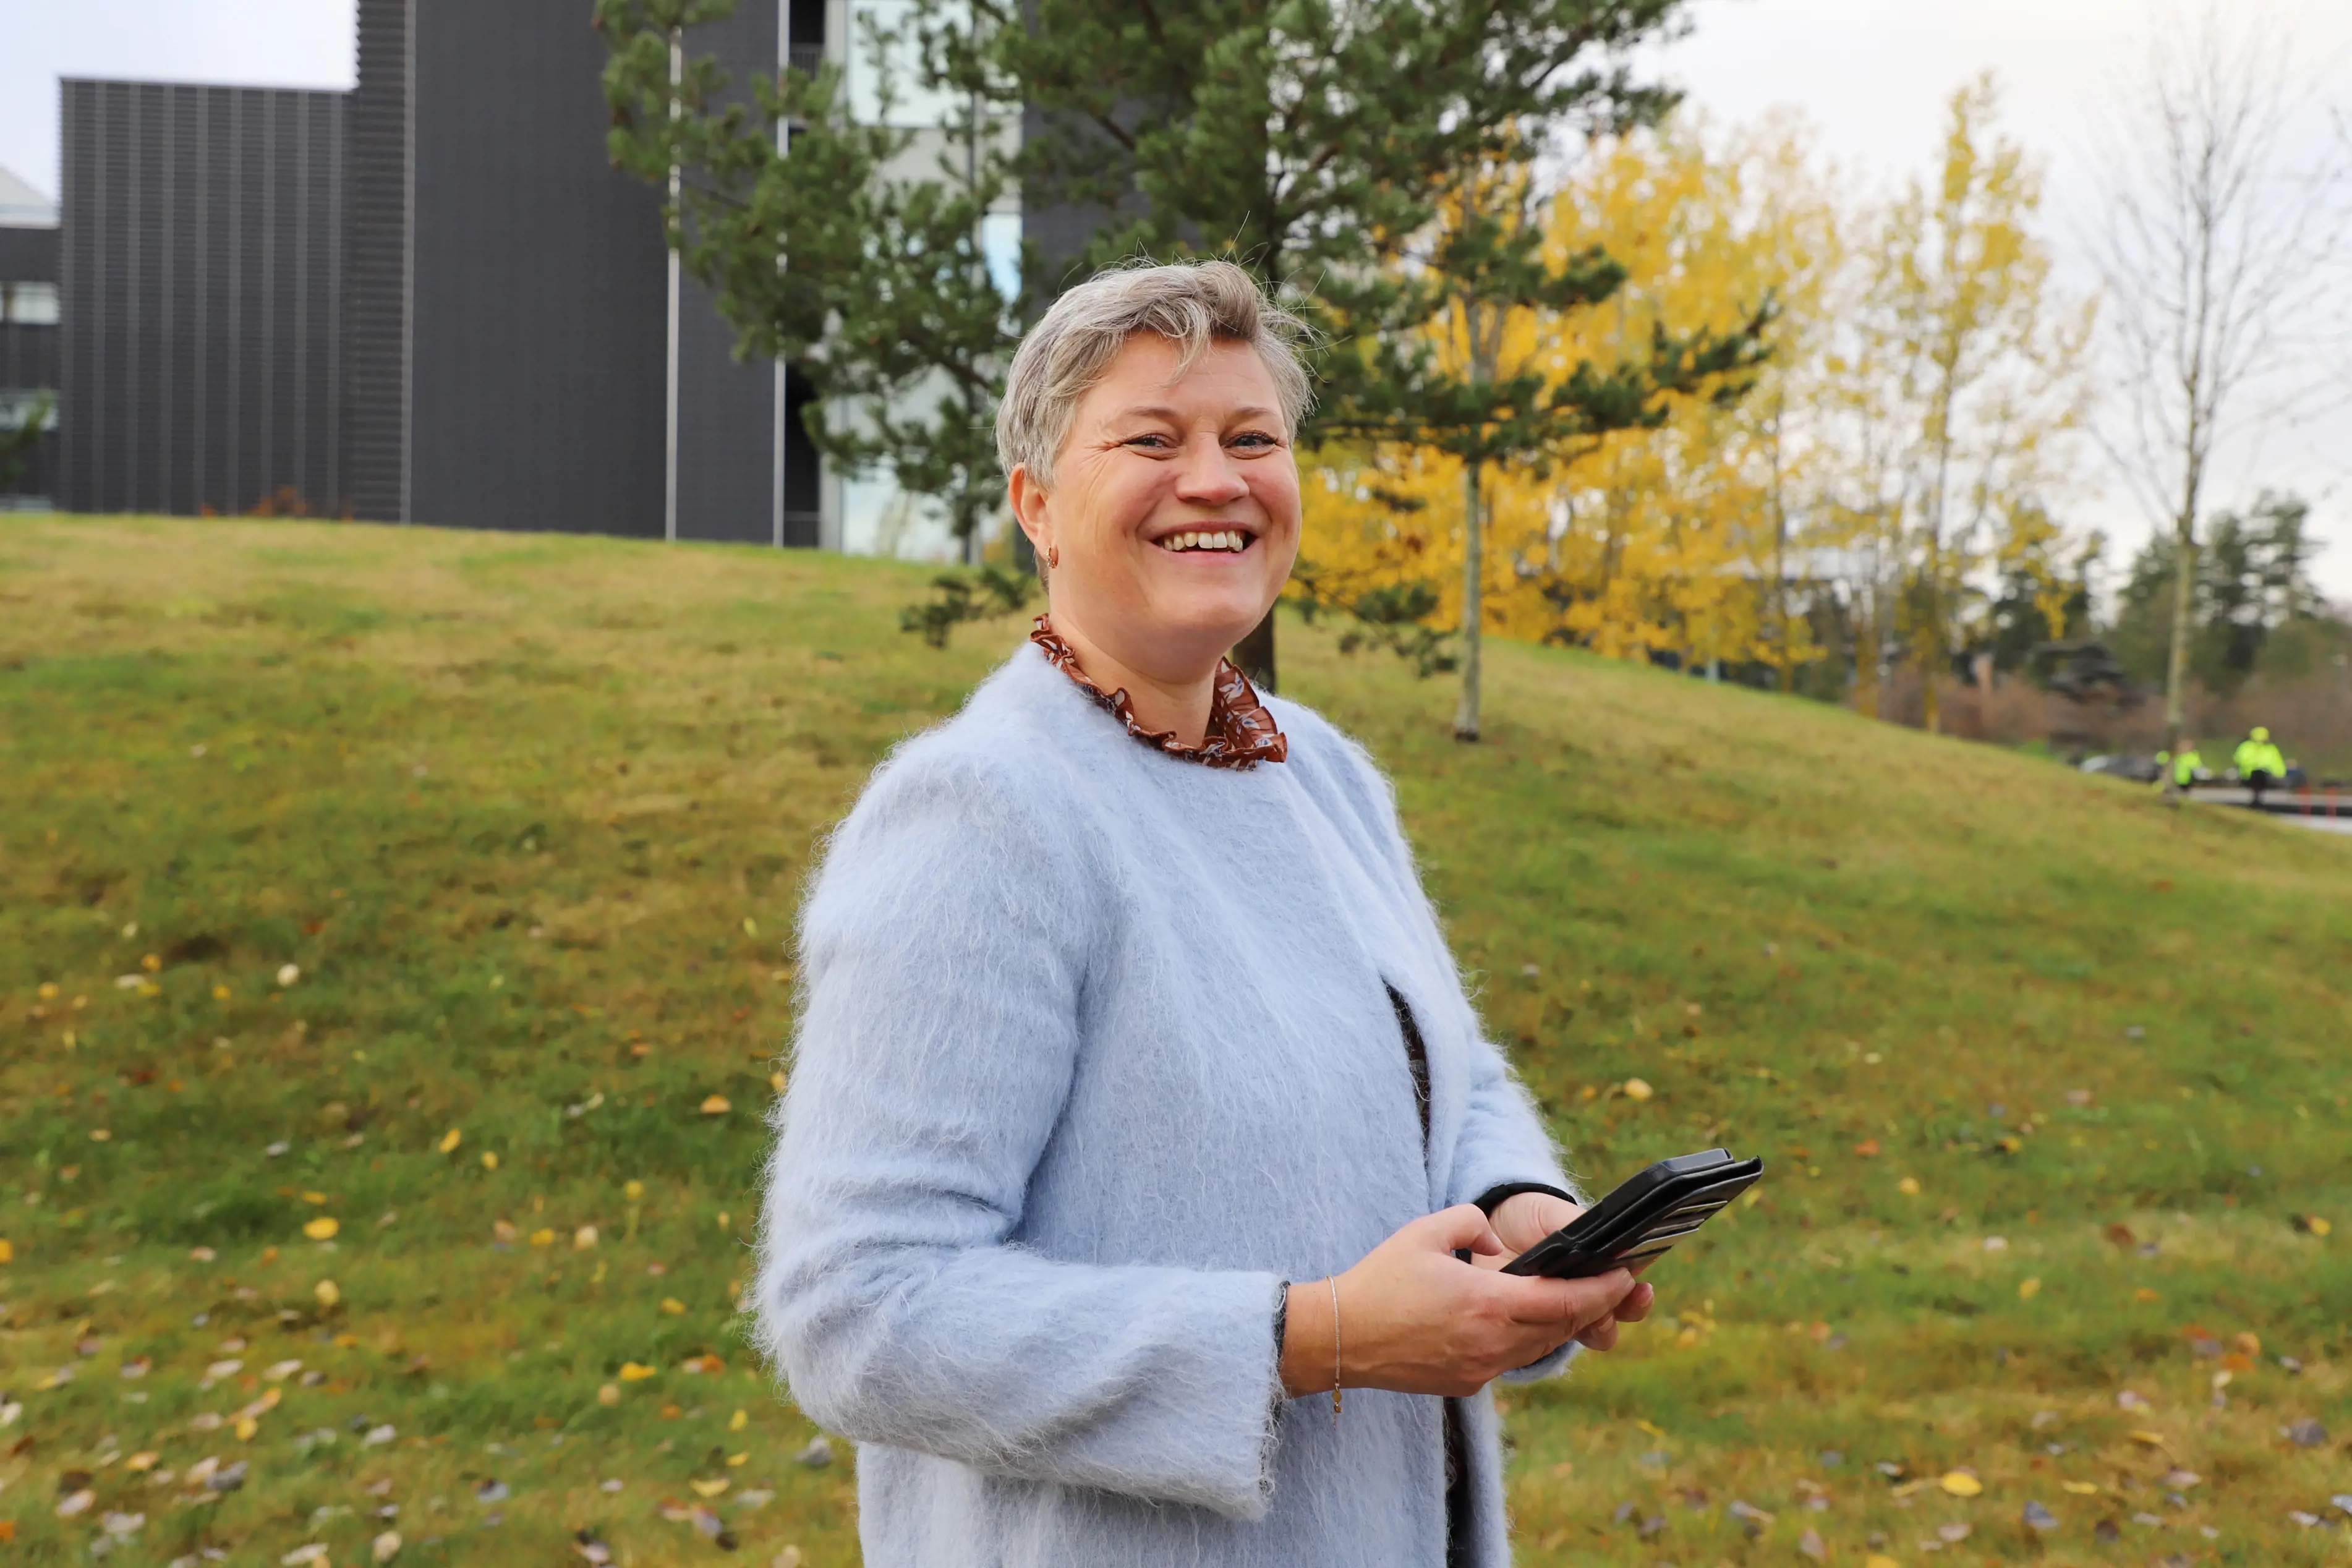 Pasienten Melinda med mobil foran Akershus universitetssykehus.